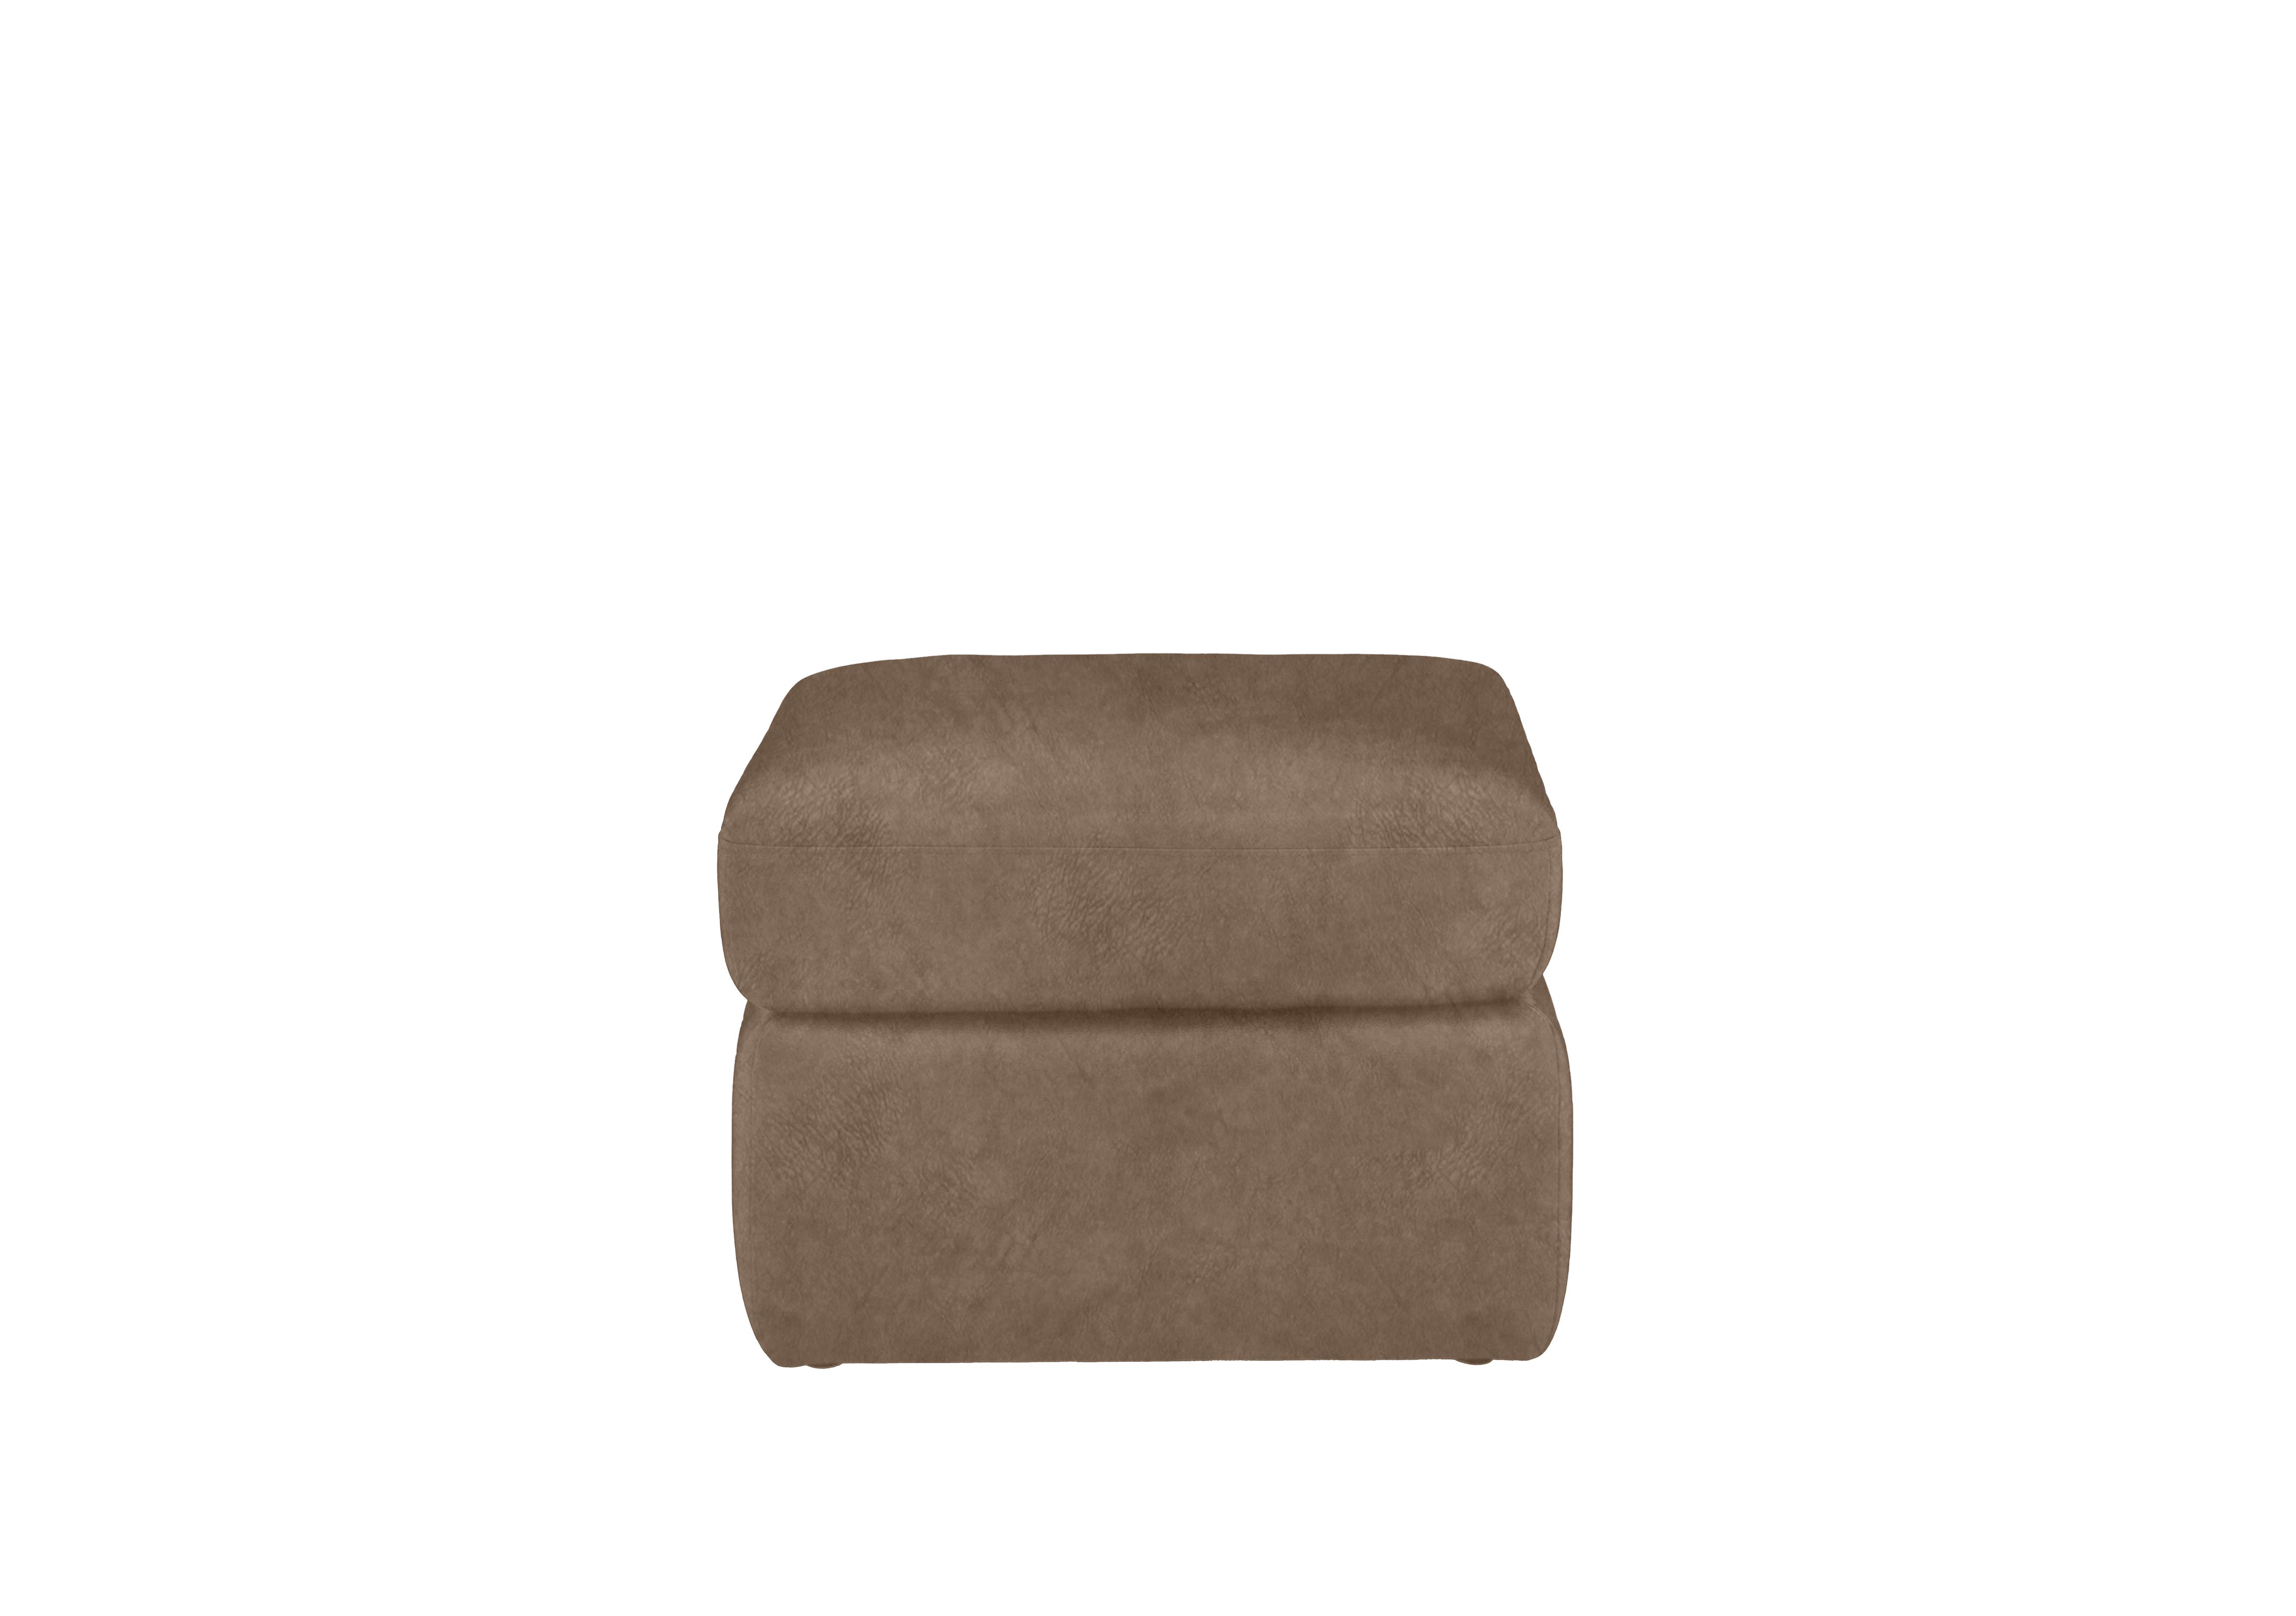 Utah Fabric Storage Footstool in Classic Brown Be-0105 on Furniture Village